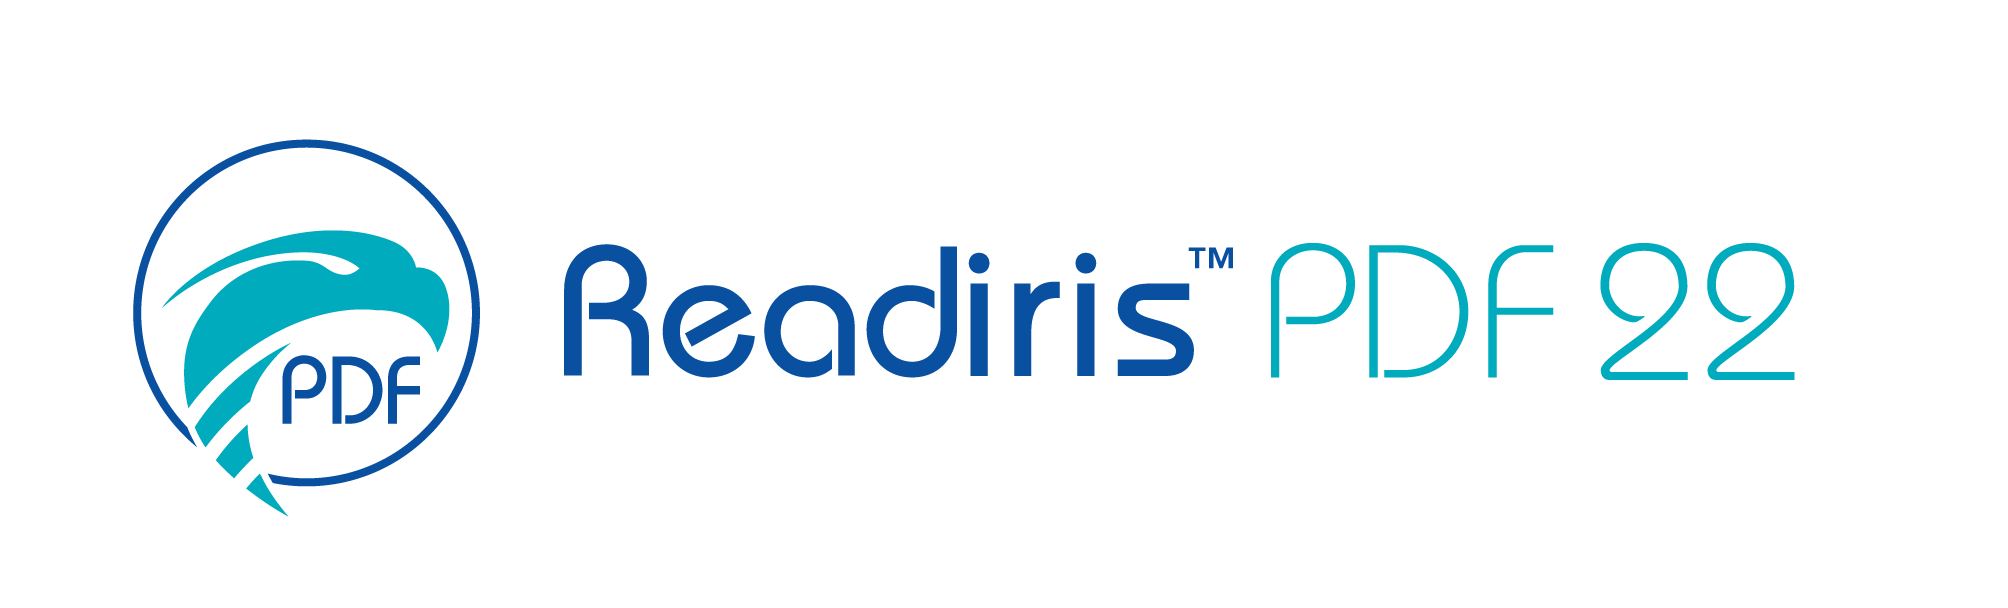 Readiris 22 logo